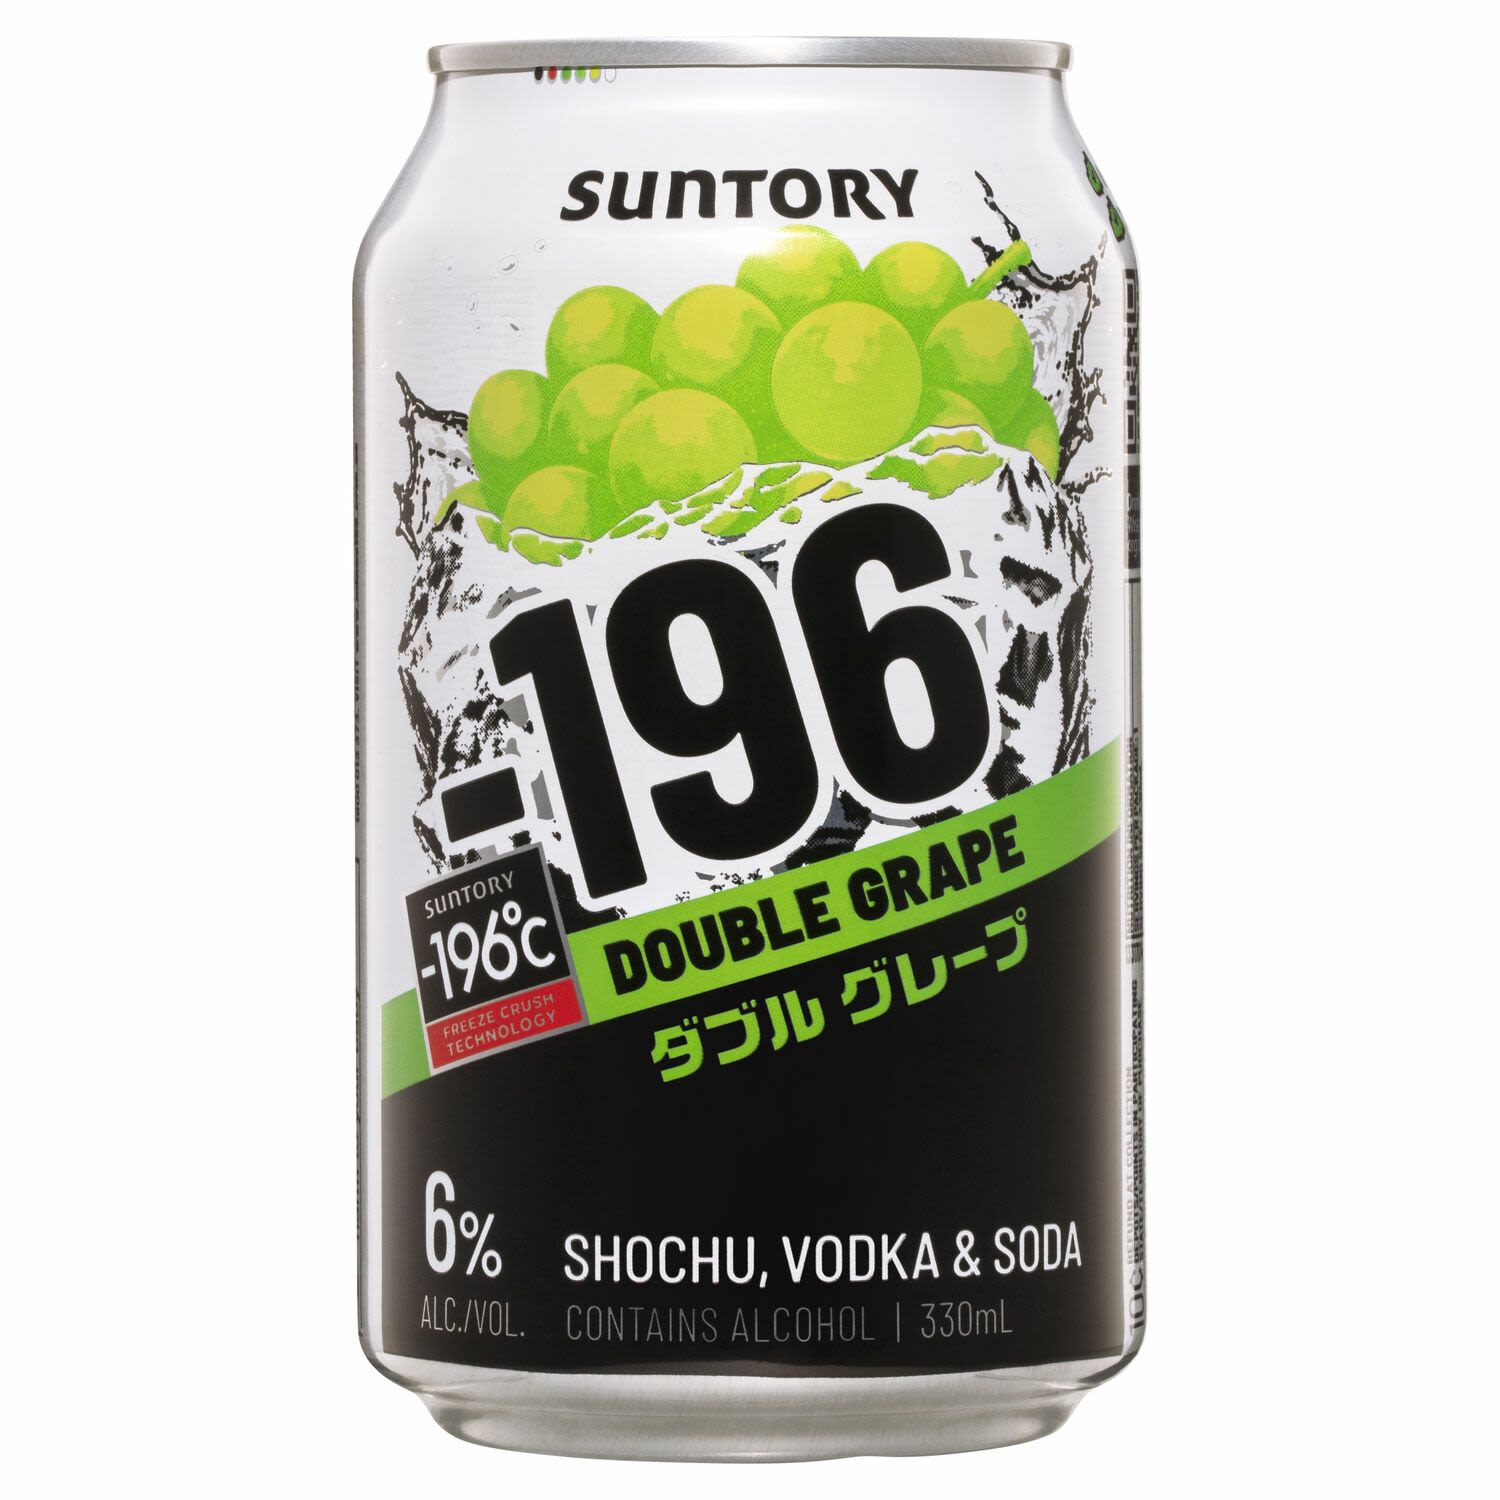 Suntory -196 Double Grape Can 330mL 24 Pack